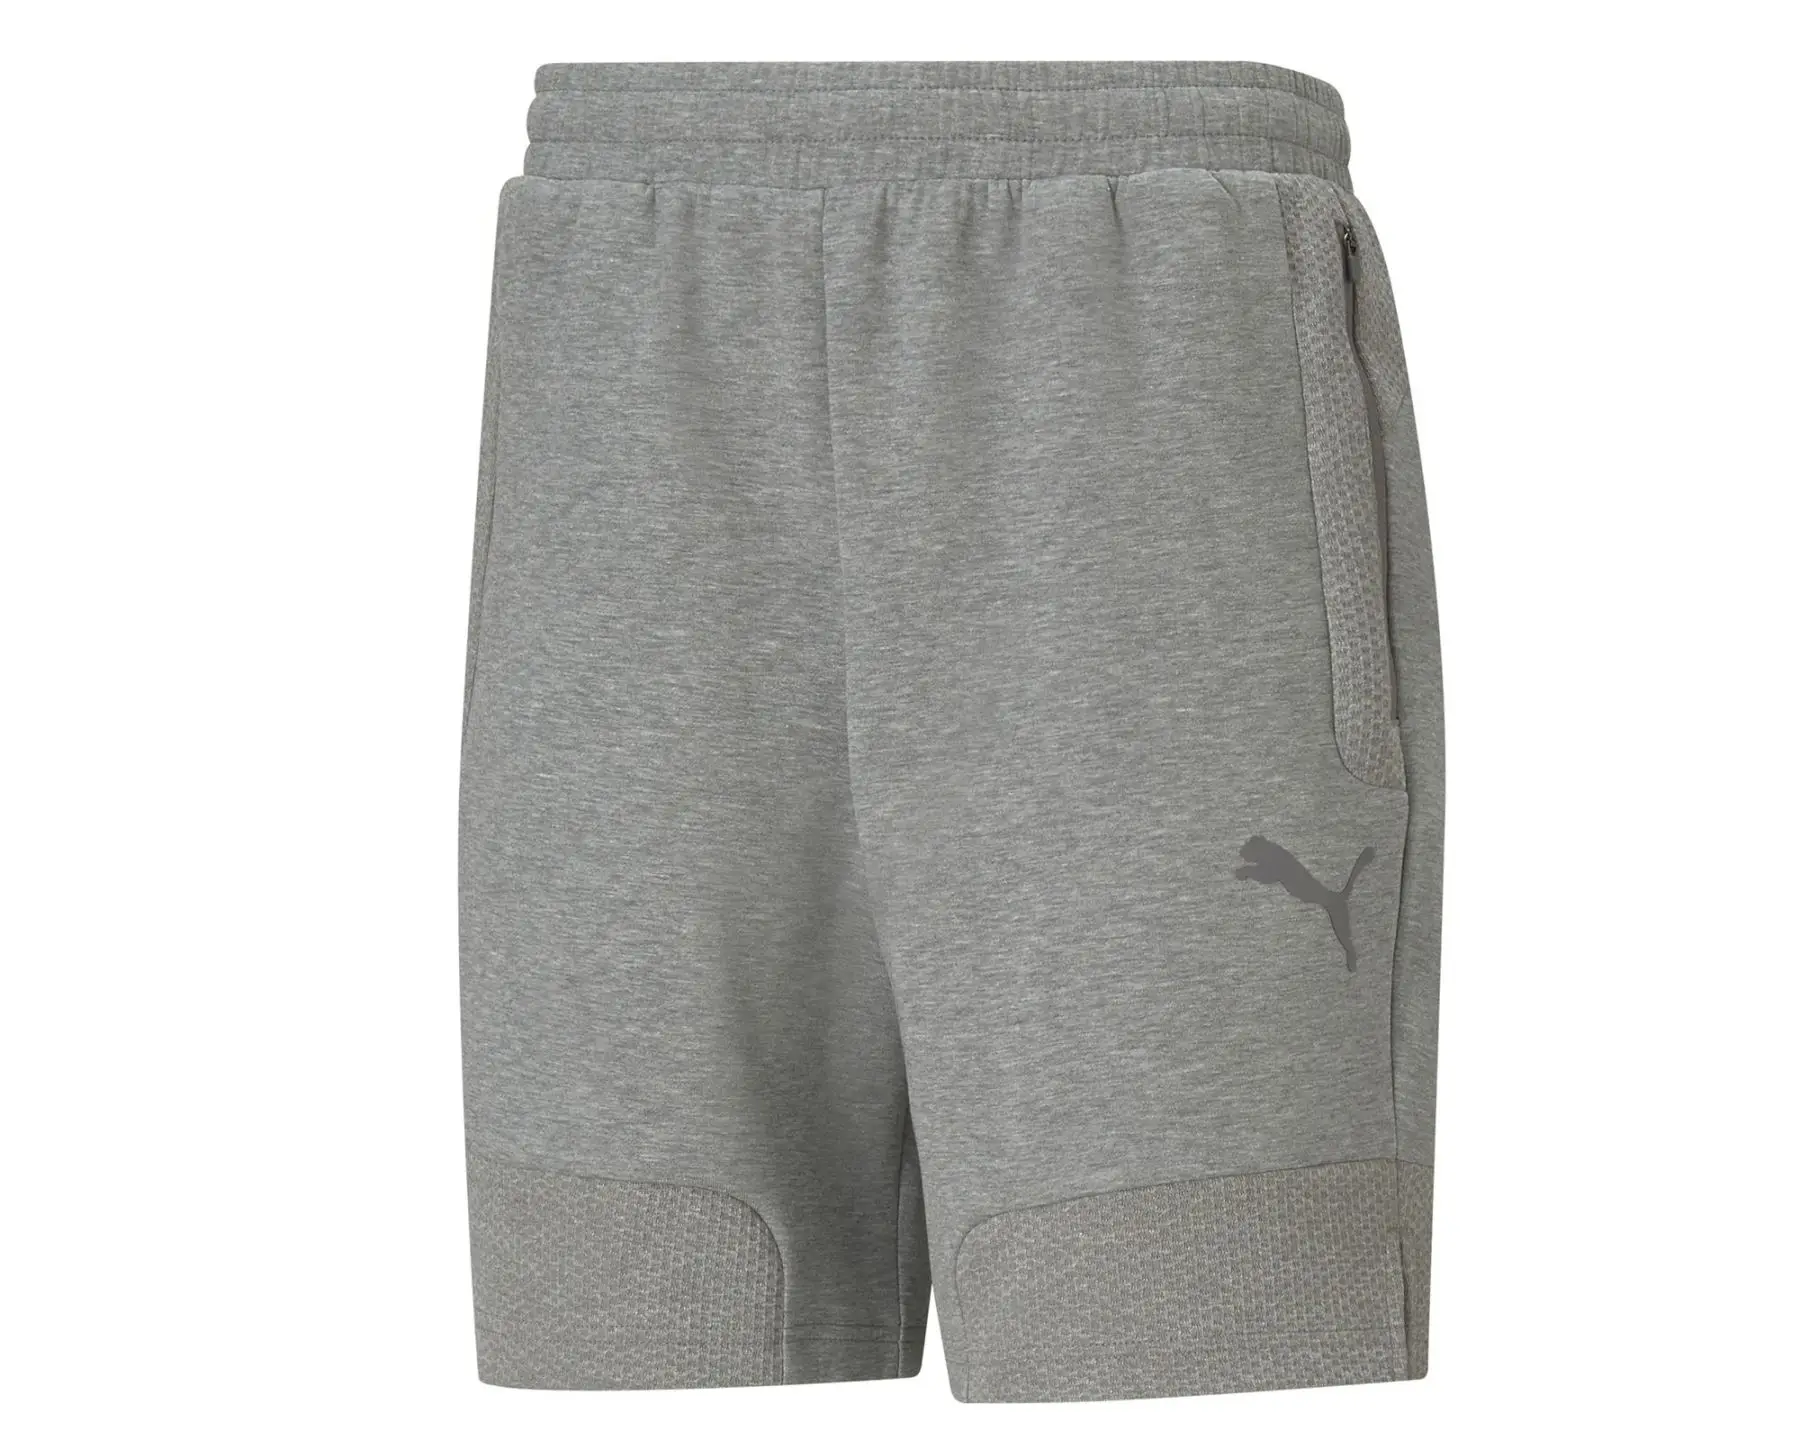 Puma Original Men Shorts Summer Short Pants Casual Shorts Football Shorts Men's Clothing